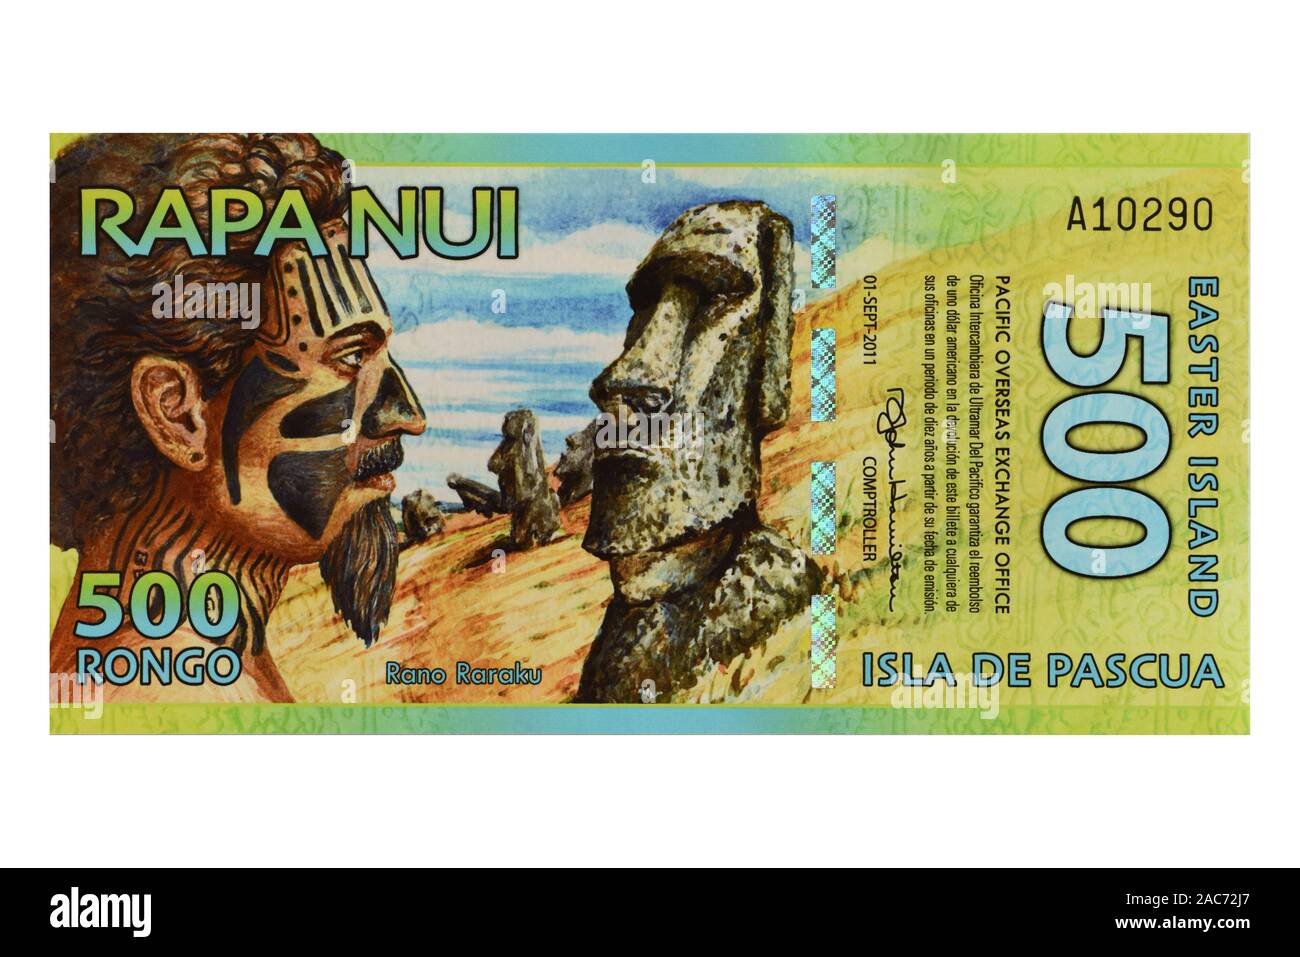 La banconota von Rapa Nui, Osterinseln Foto Stock